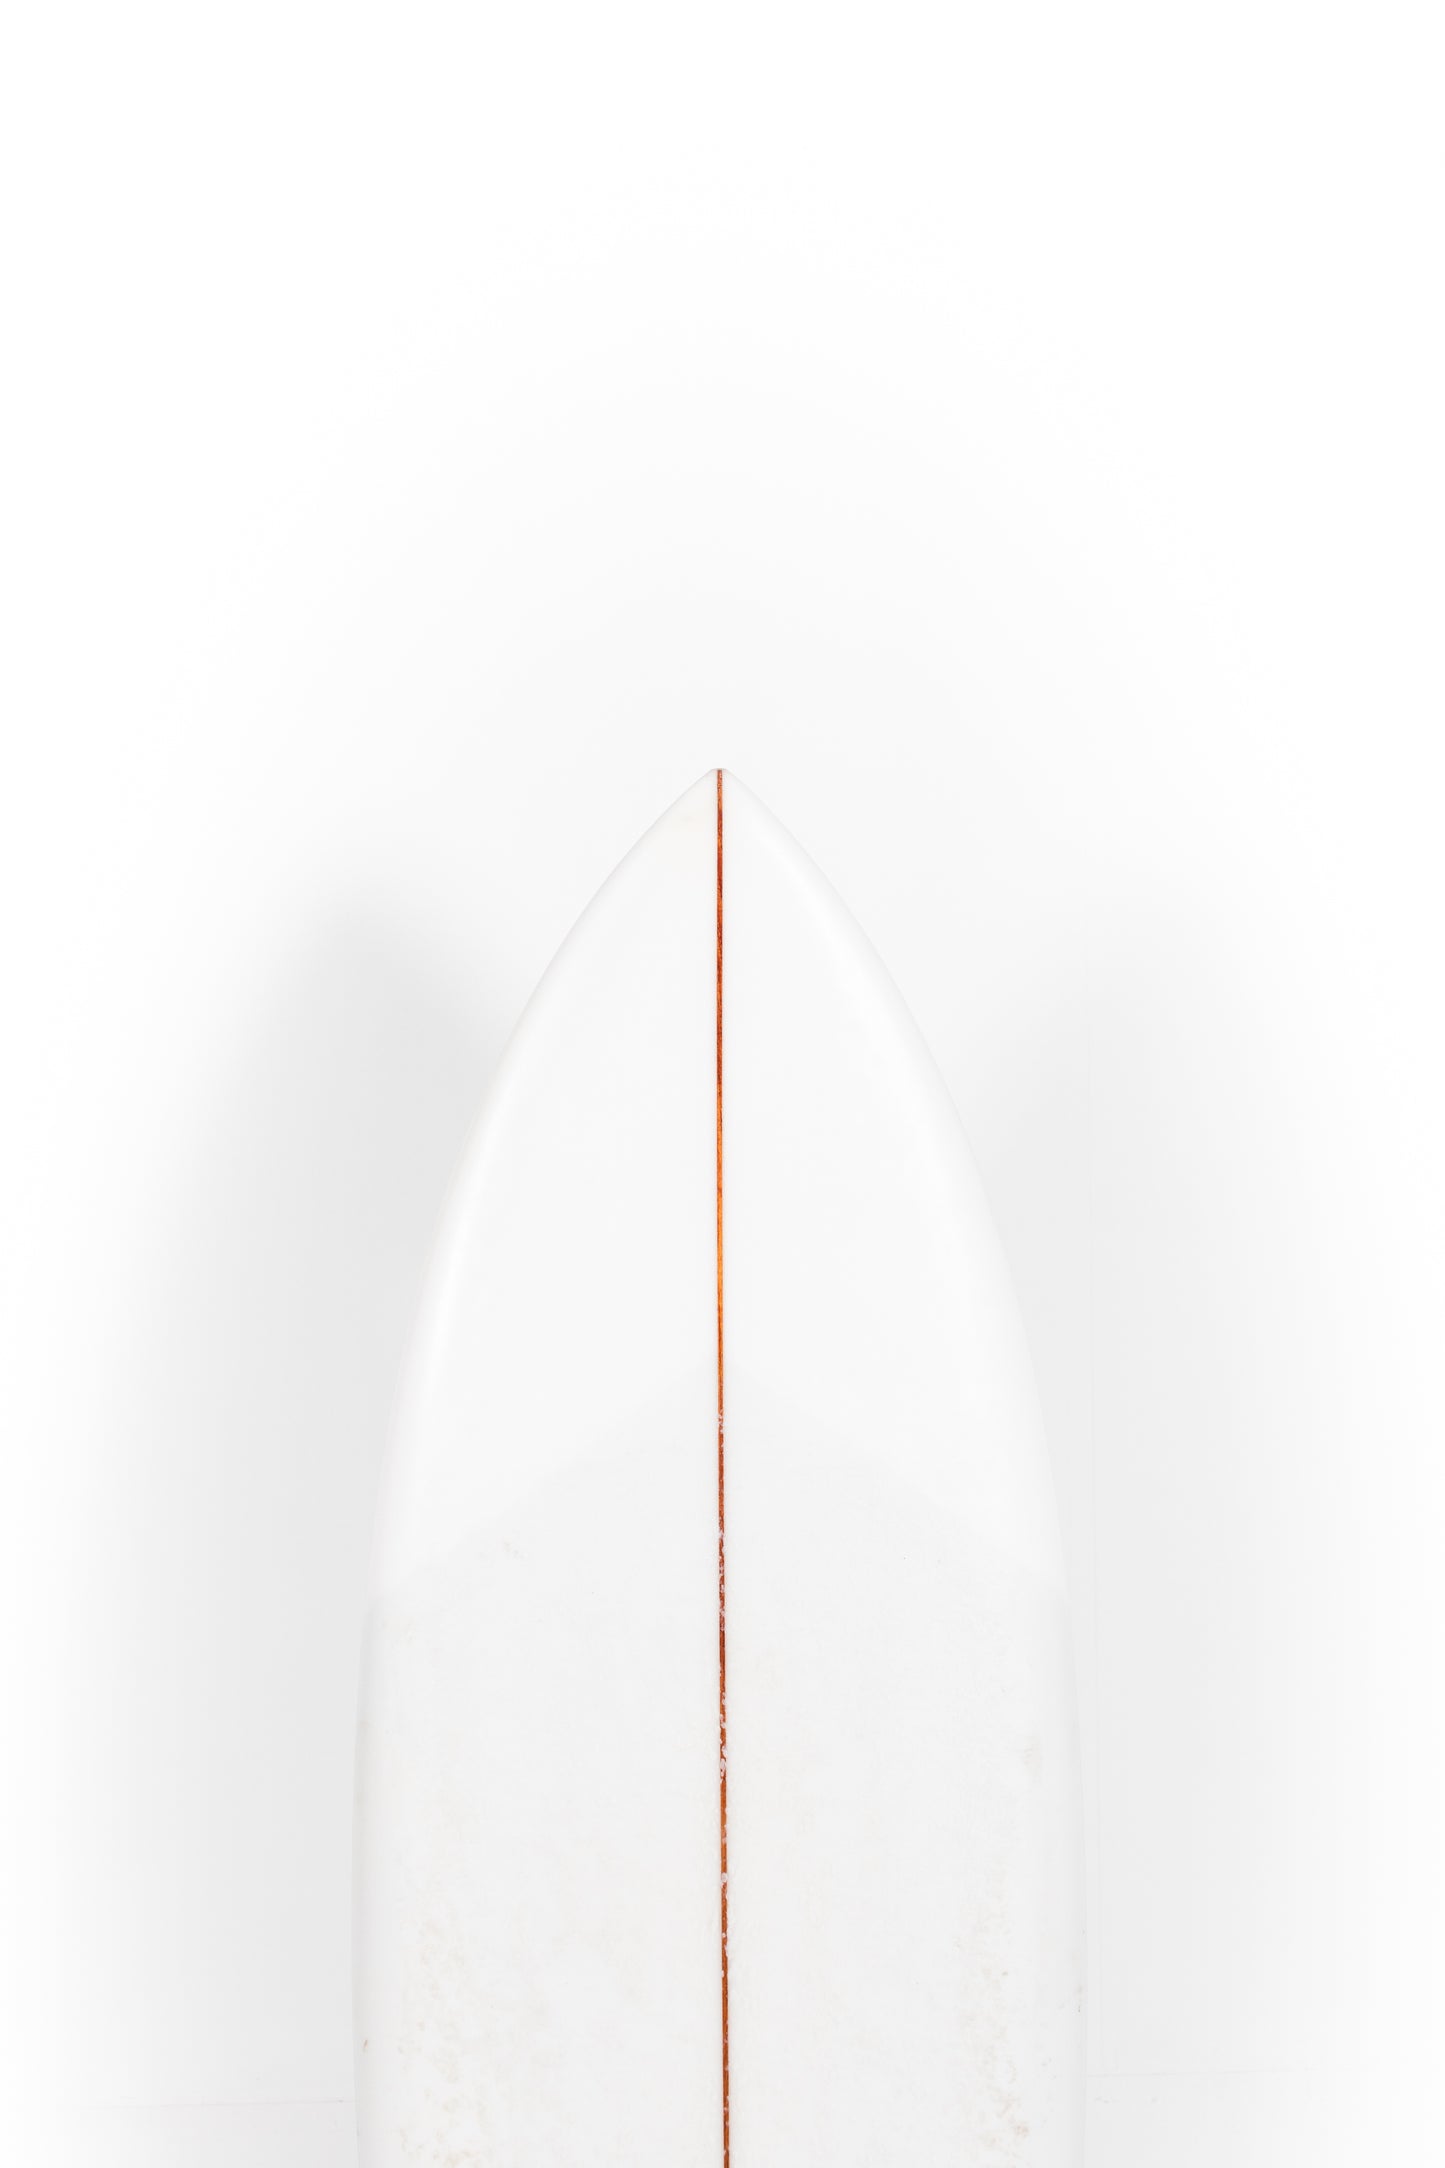 
                  
                    Pukas Surf Shop - 2ND HAND Pukas Surfboards - LANE SPLITTER by Chris Christenson - 5’3 x 19 1/4 x 2 1/4
                  
                